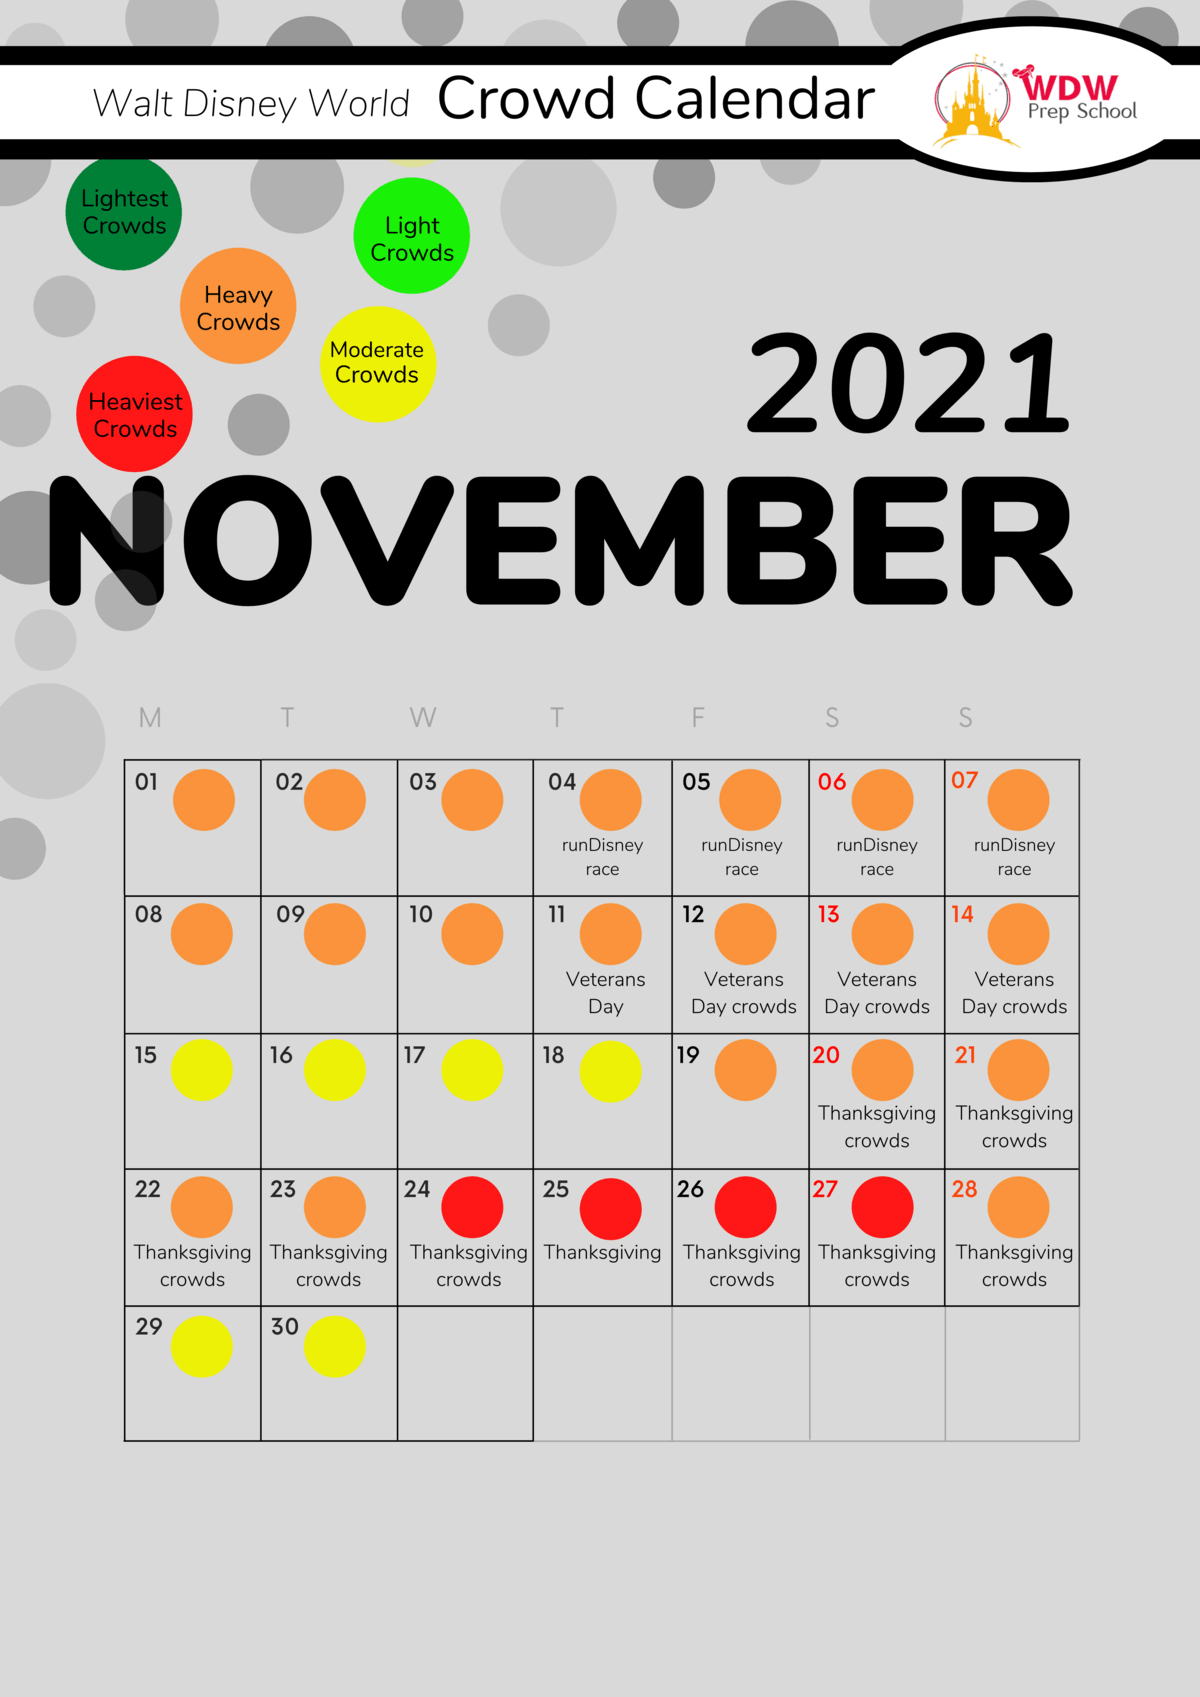 17+ Walt Disney World Crowd Calendar 2022 Time Images ⋆